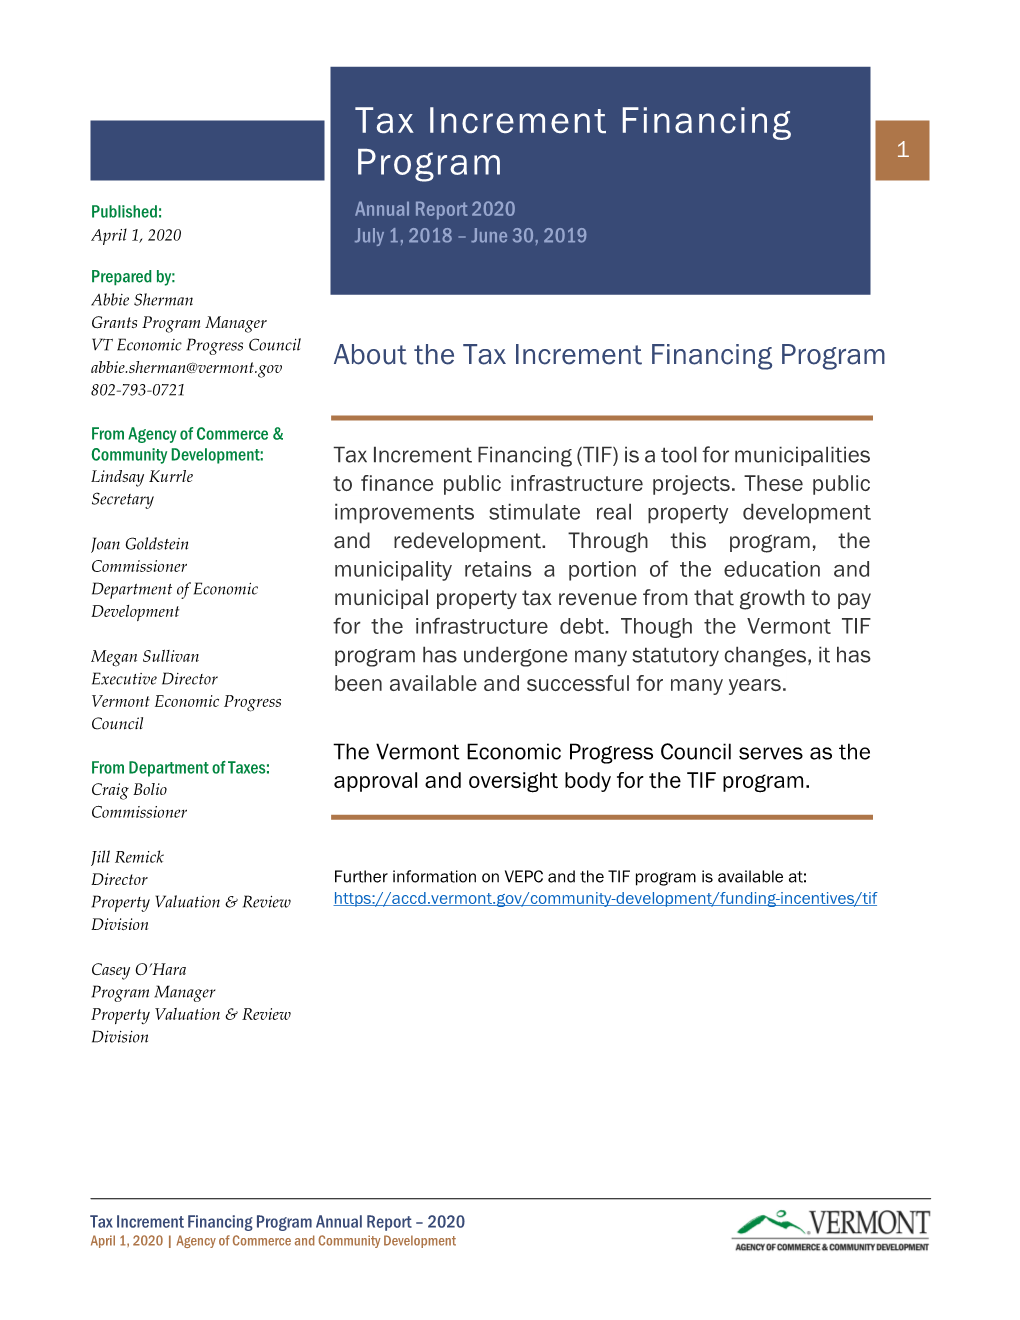 Tax Increment Financing Program 802-793-0721